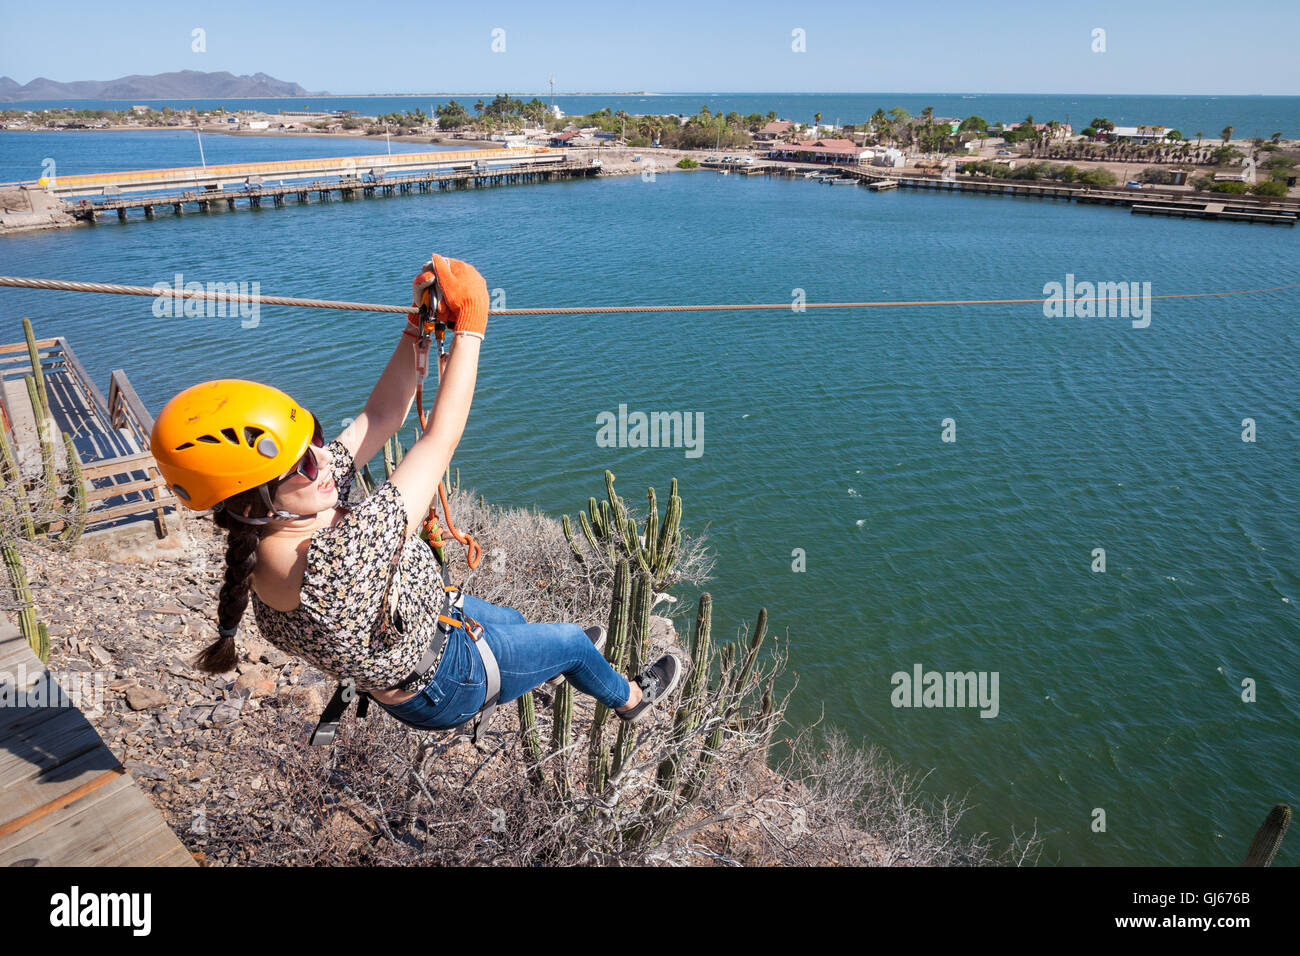 Un adolescente establece a través de una pequeña bahía de la tirolesa en Maviri playa cerca de Topolobampo, México. Foto de stock